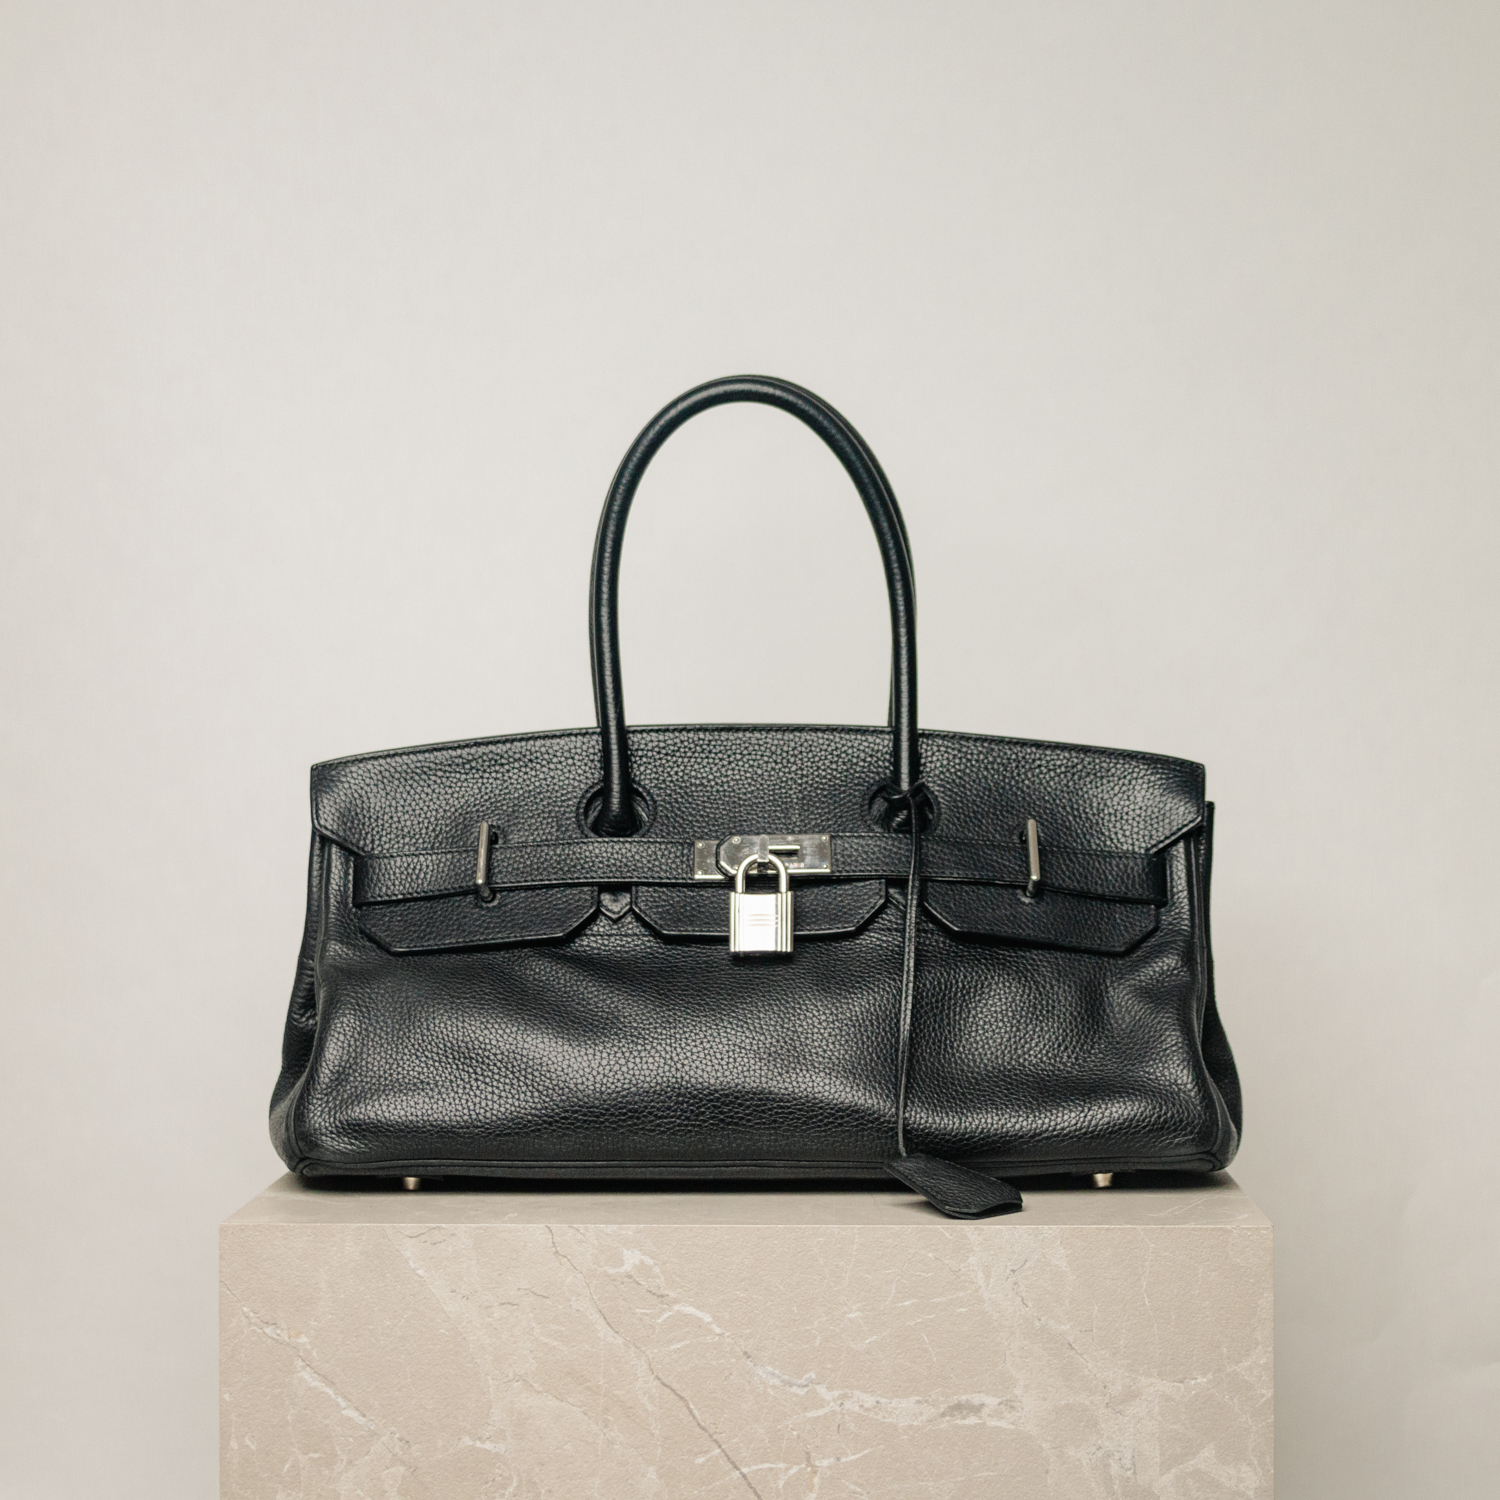 Hermès JPG Birkin Bag Togo Leather Black with Silver Hardware